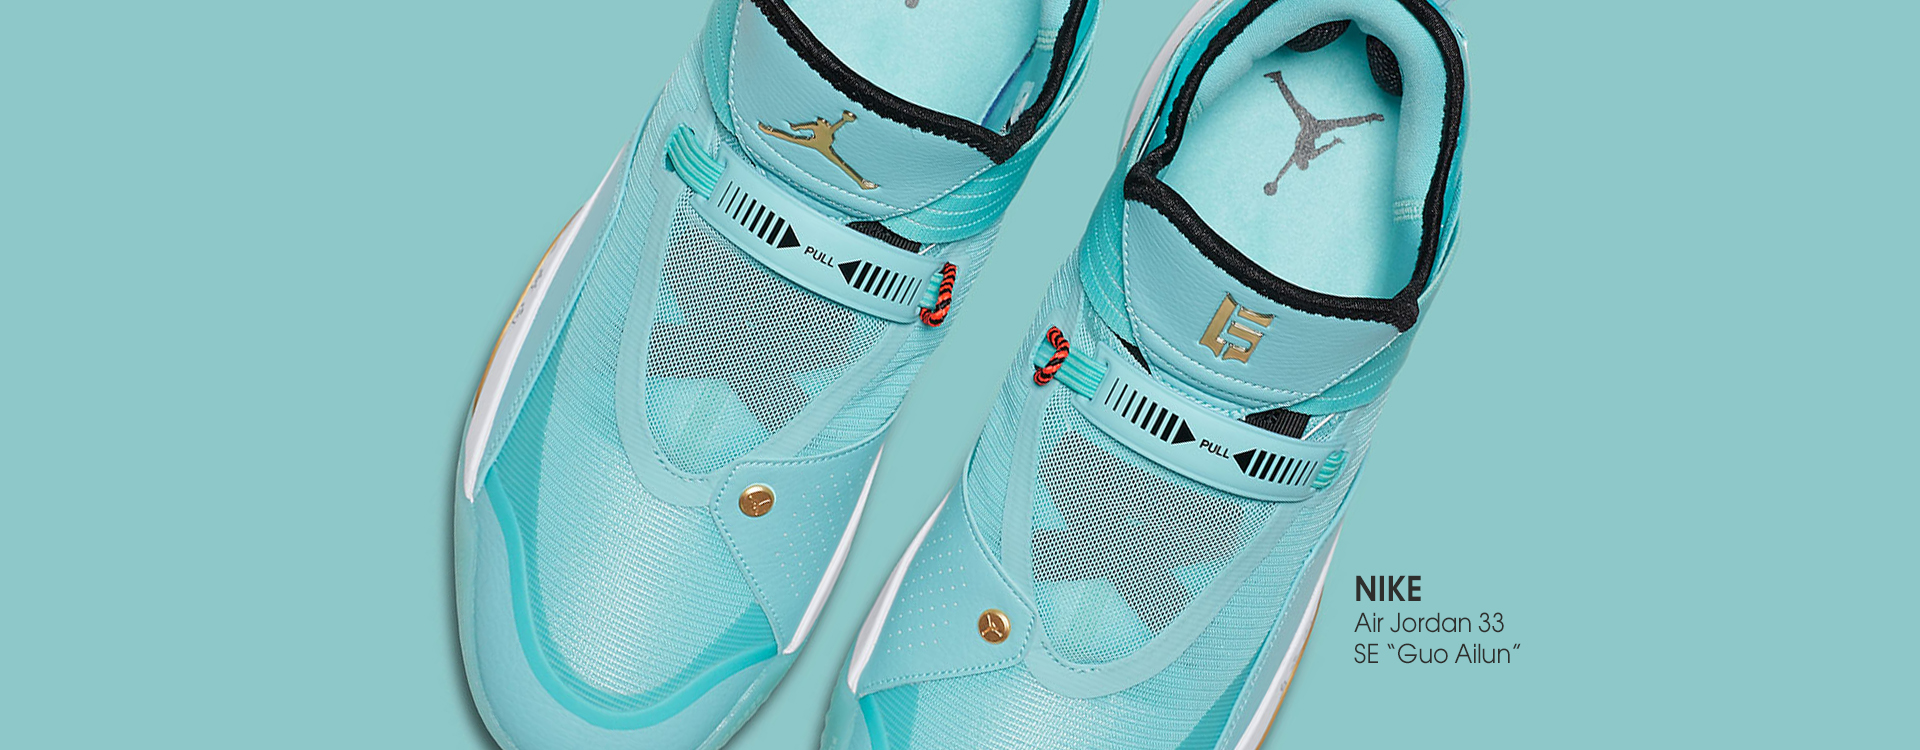 Кроссовки Nike Air Jordan 33 SE “Guo Ailun”